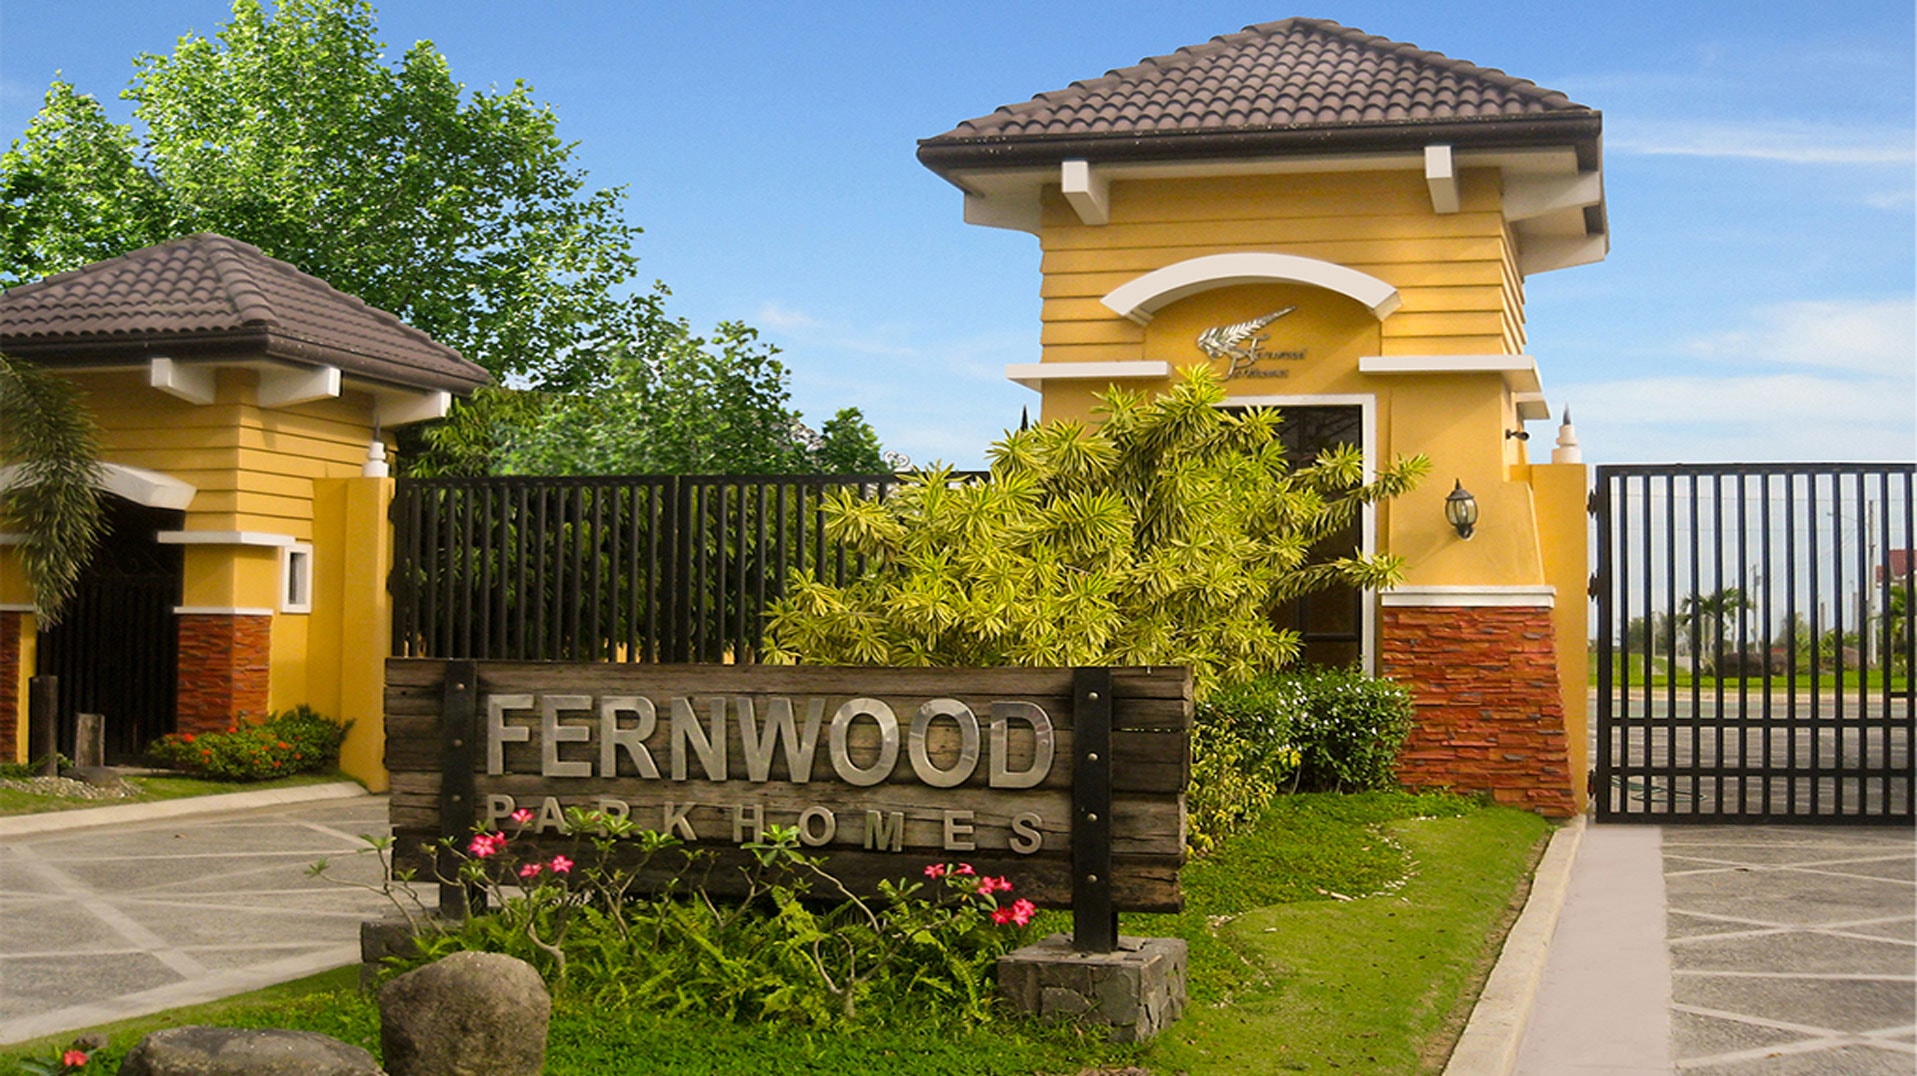 Robinsons-Homes-Fernwood-Parkhomes.jpg